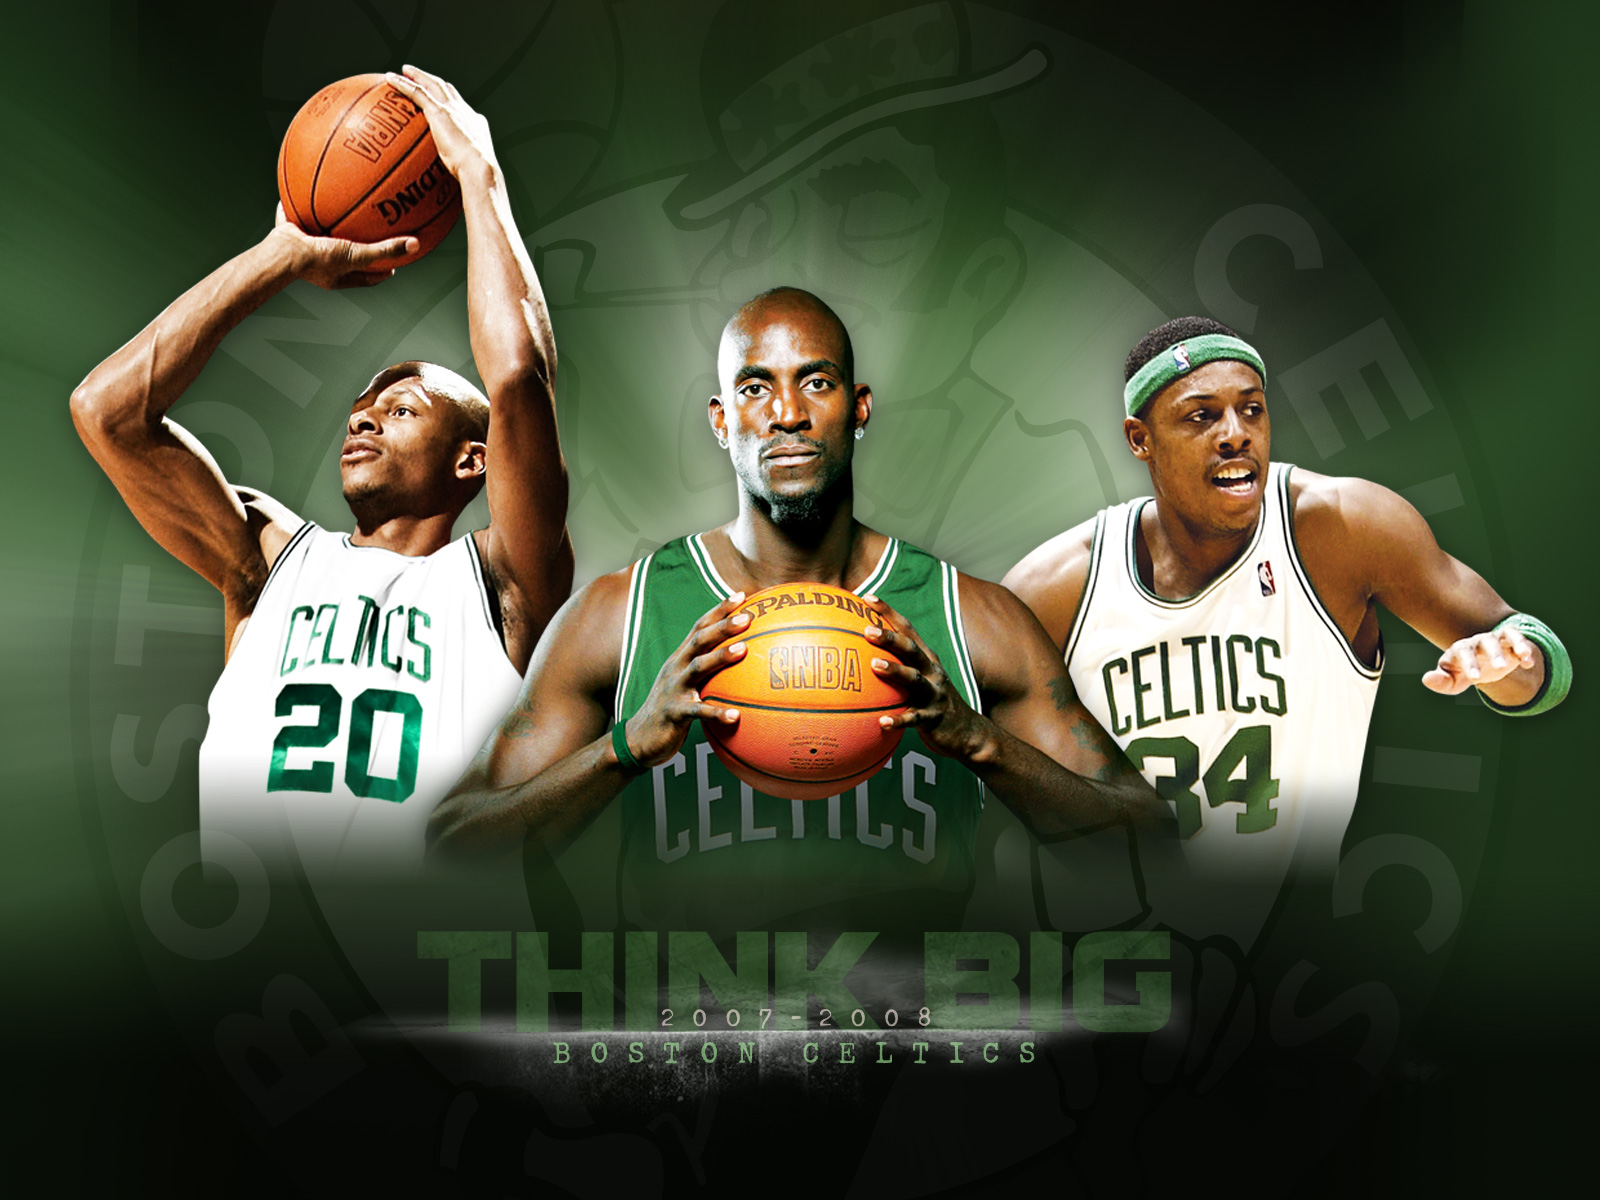 http://4.bp.blogspot.com/-JKGNeuk_3Zk/Tj2UxZqdFBI/AAAAAAAADvs/6lURYka4J4s/s1600/Kevin-Garnett_Celtics.jpg